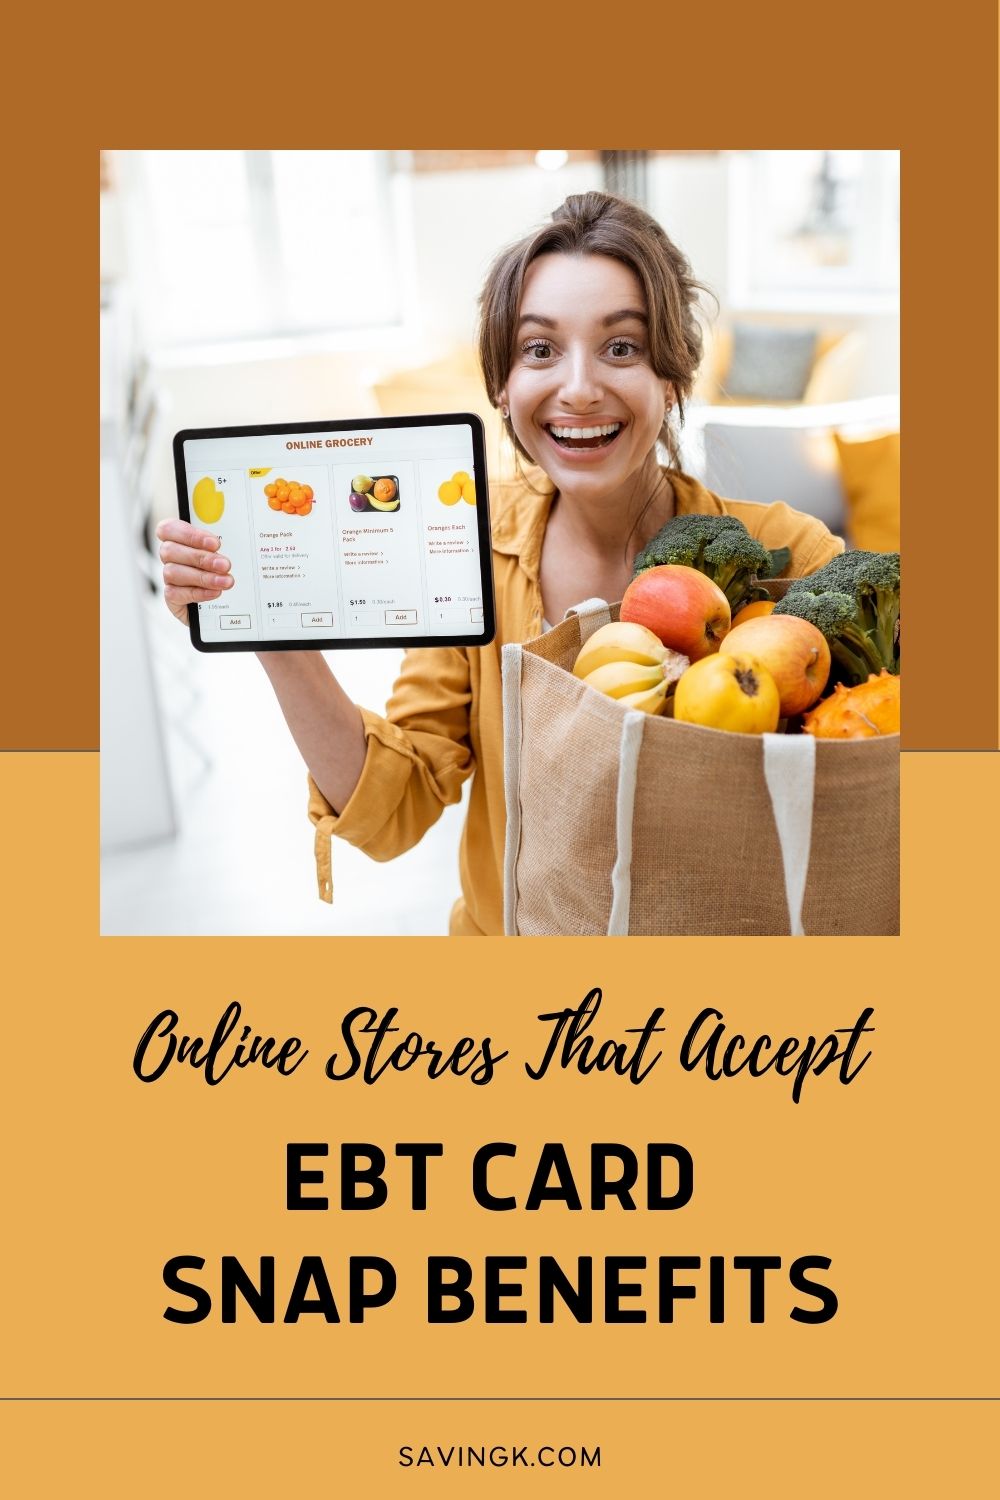 Online Stores That Accept EBT Card SNAP Benefits